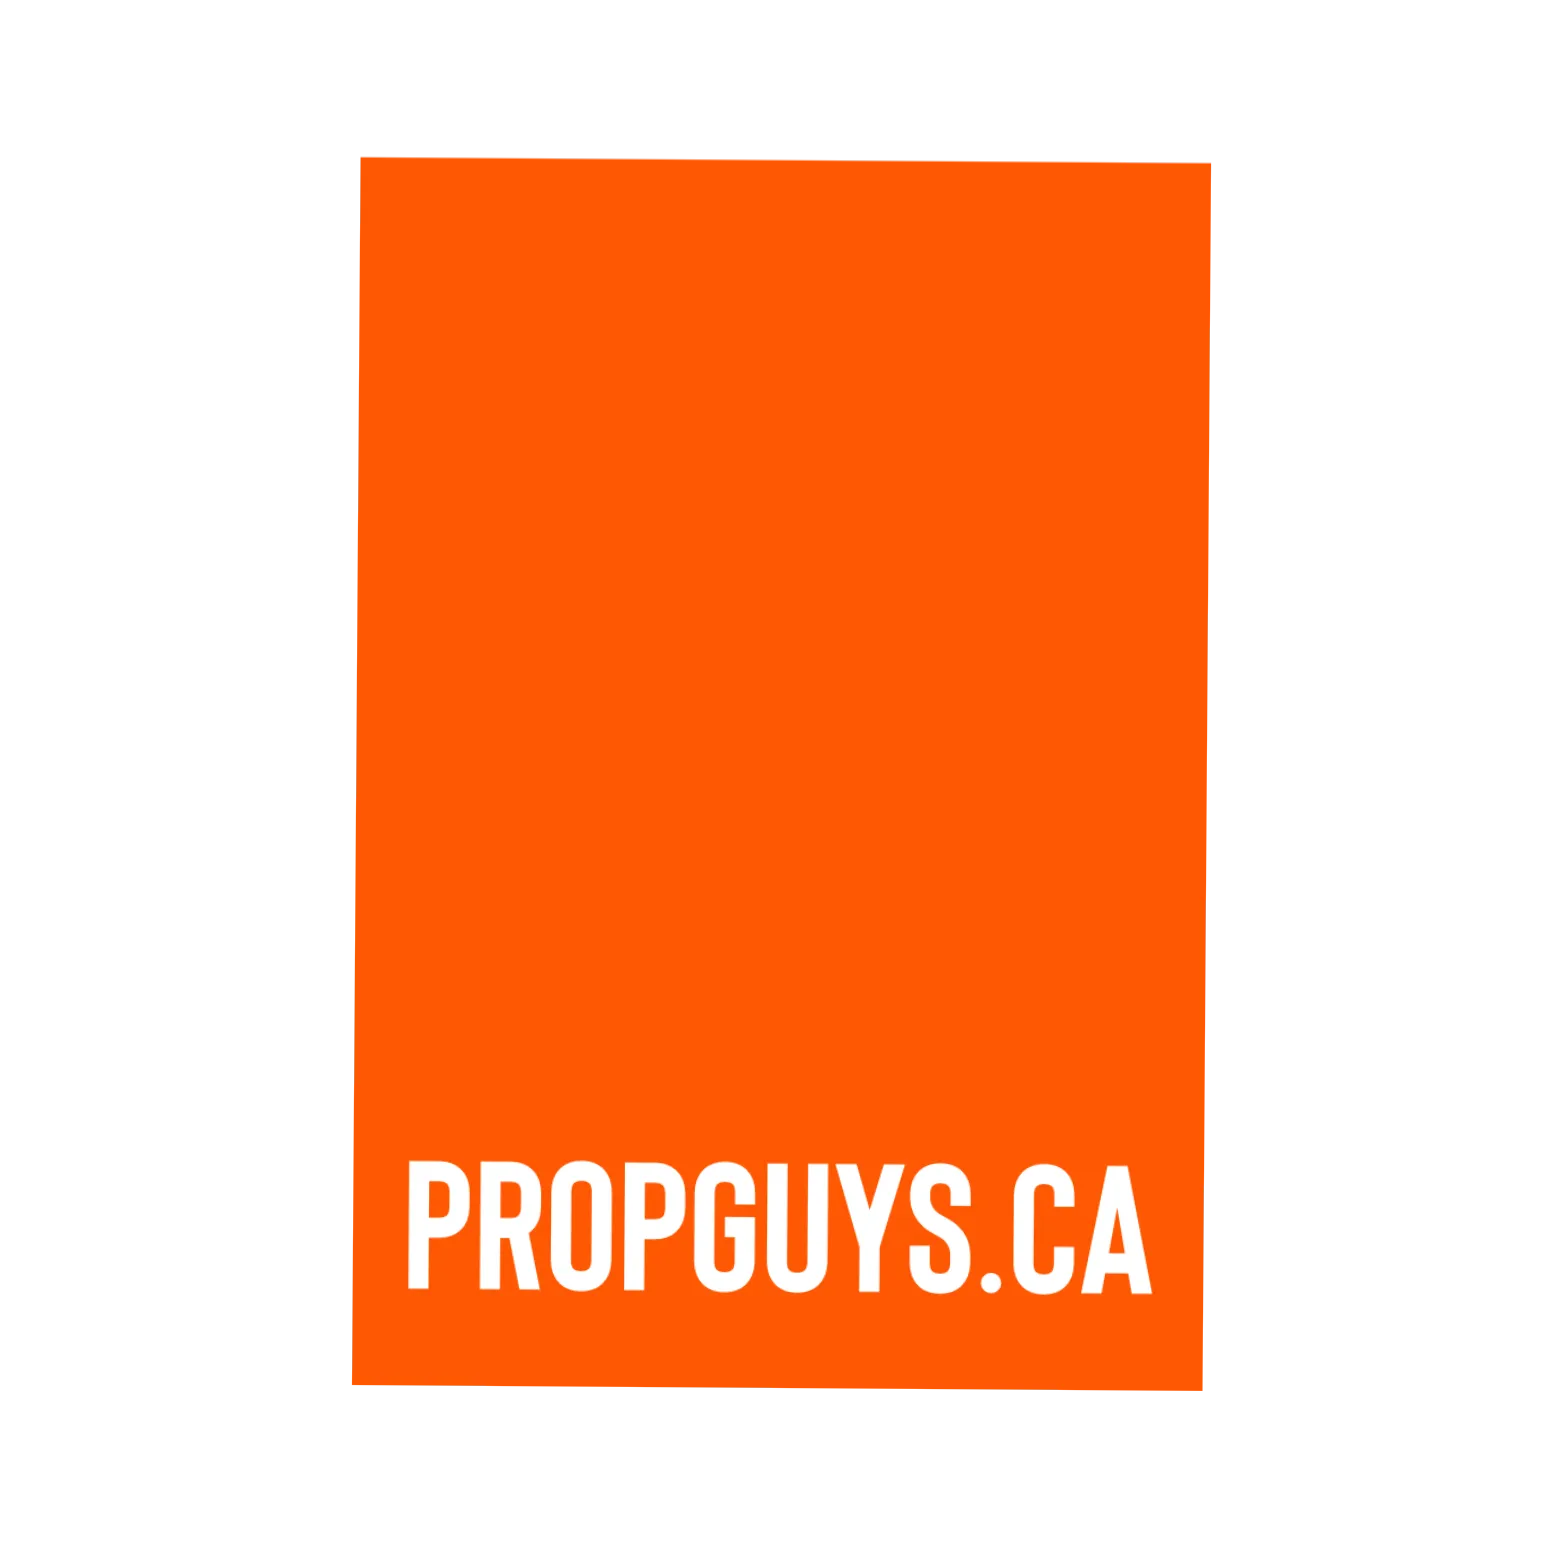 PropGuys.ca